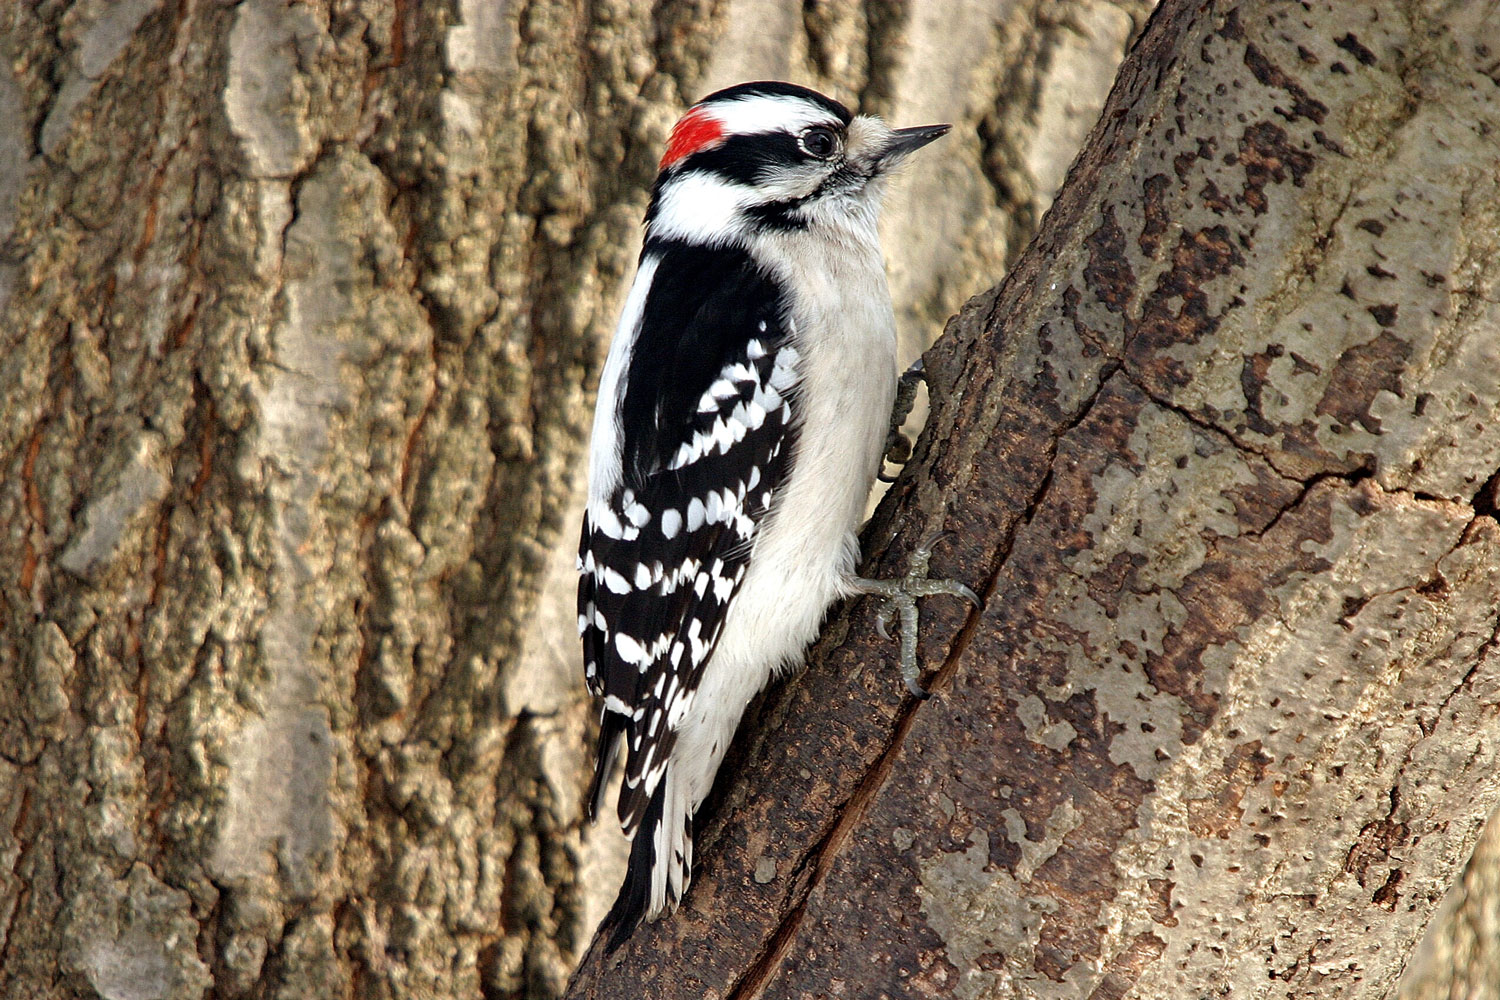 A downy woodpecker in a tree